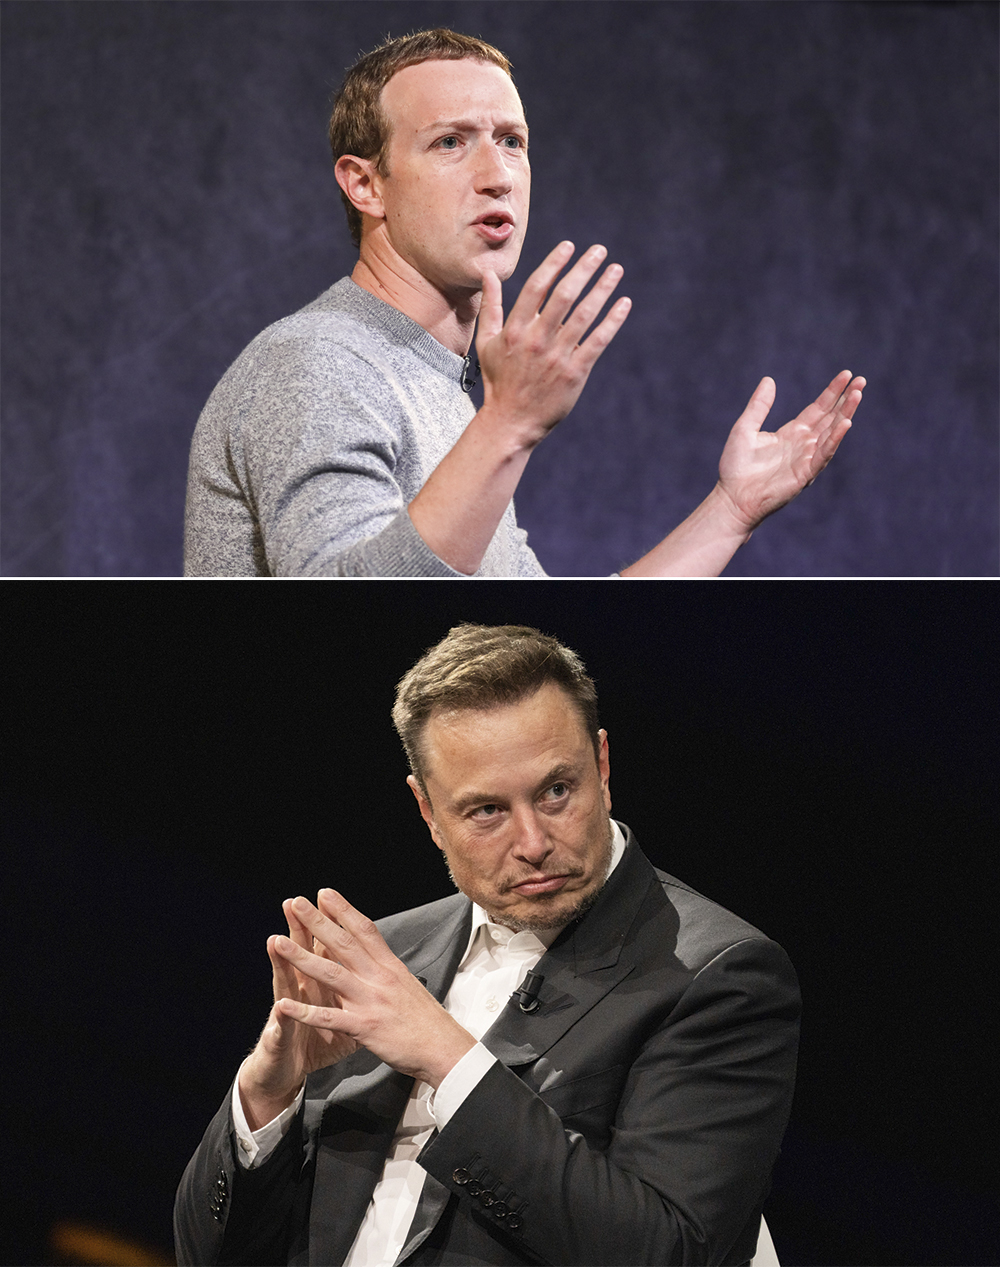 EMBATE DE EGOS - Rivais: Zuckerberg (acima) lança desafio a Musk (abaixo)